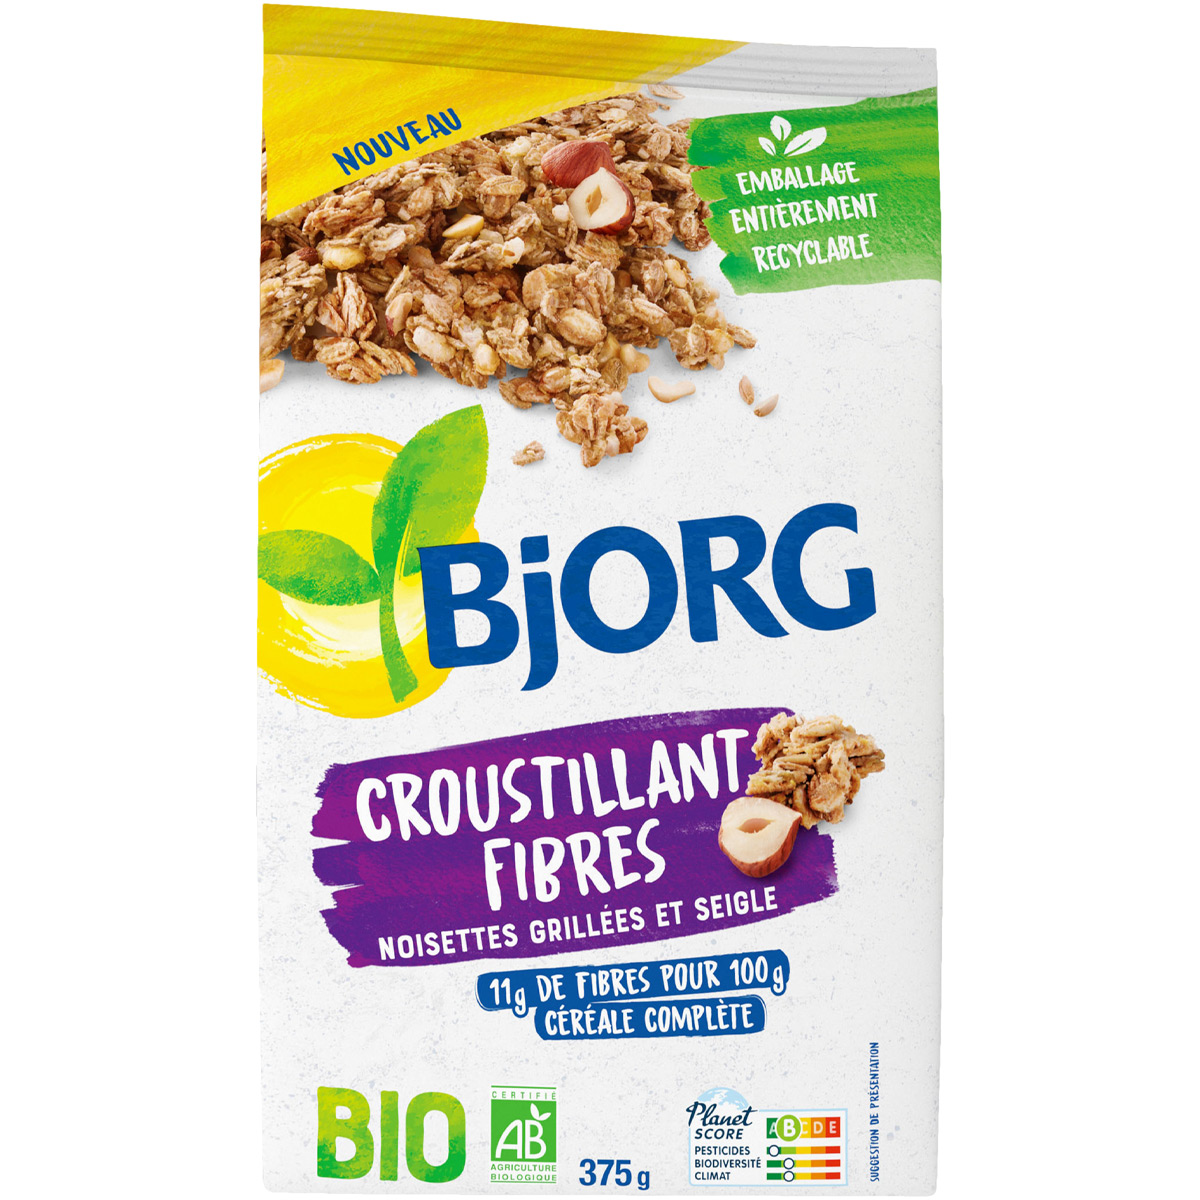 Croustillant fibres bio - 375g